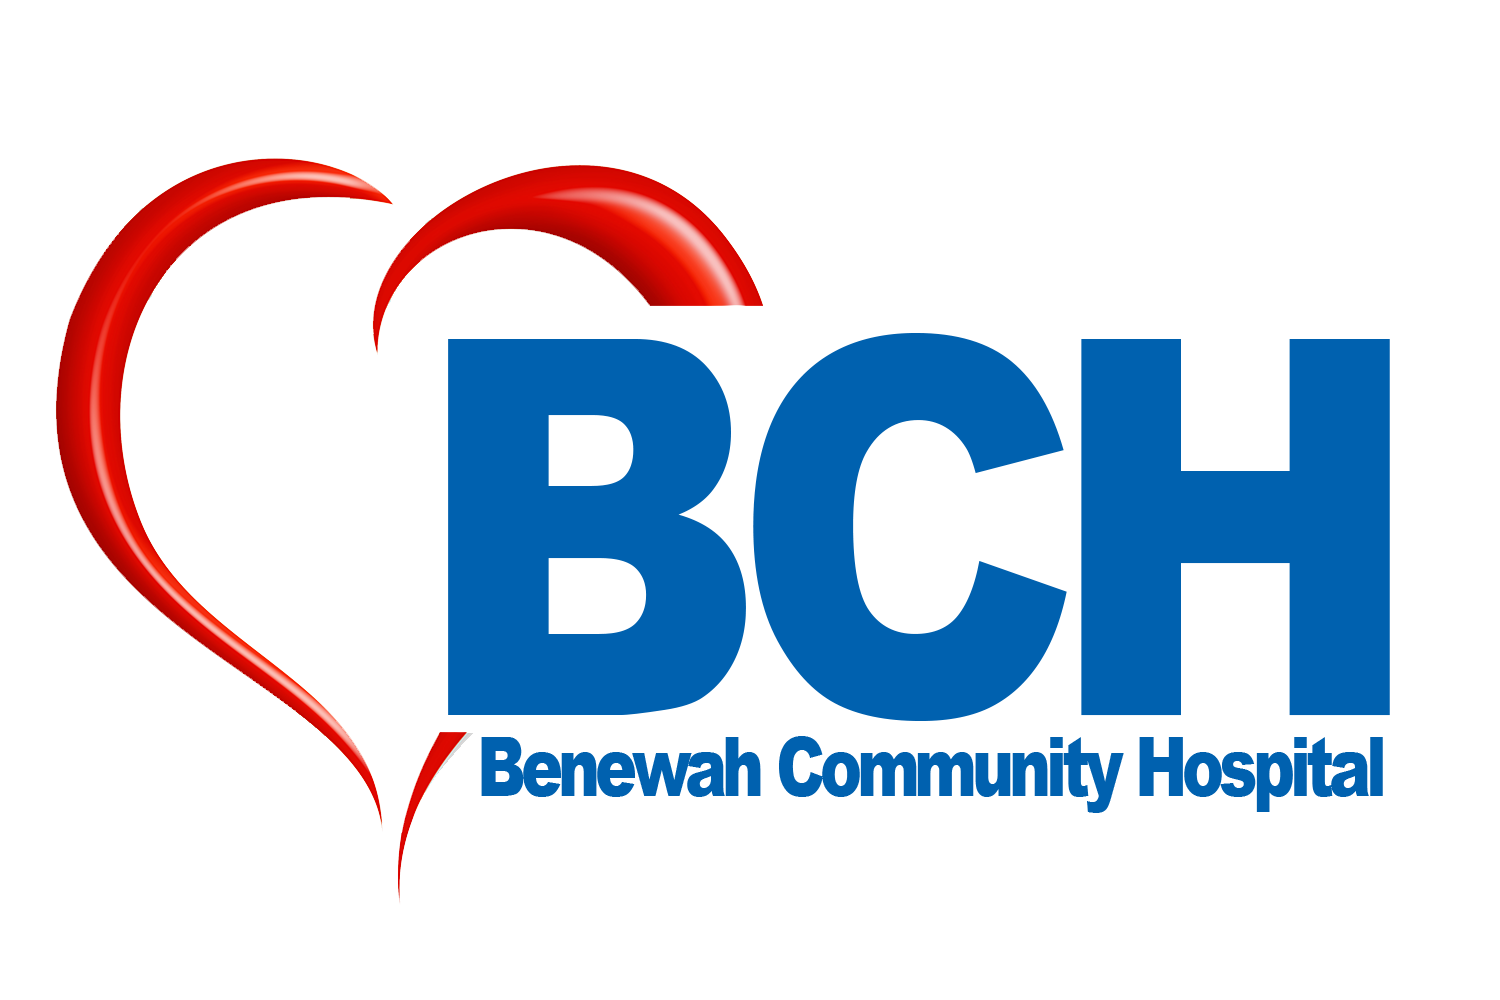 Benewah Community Hospital